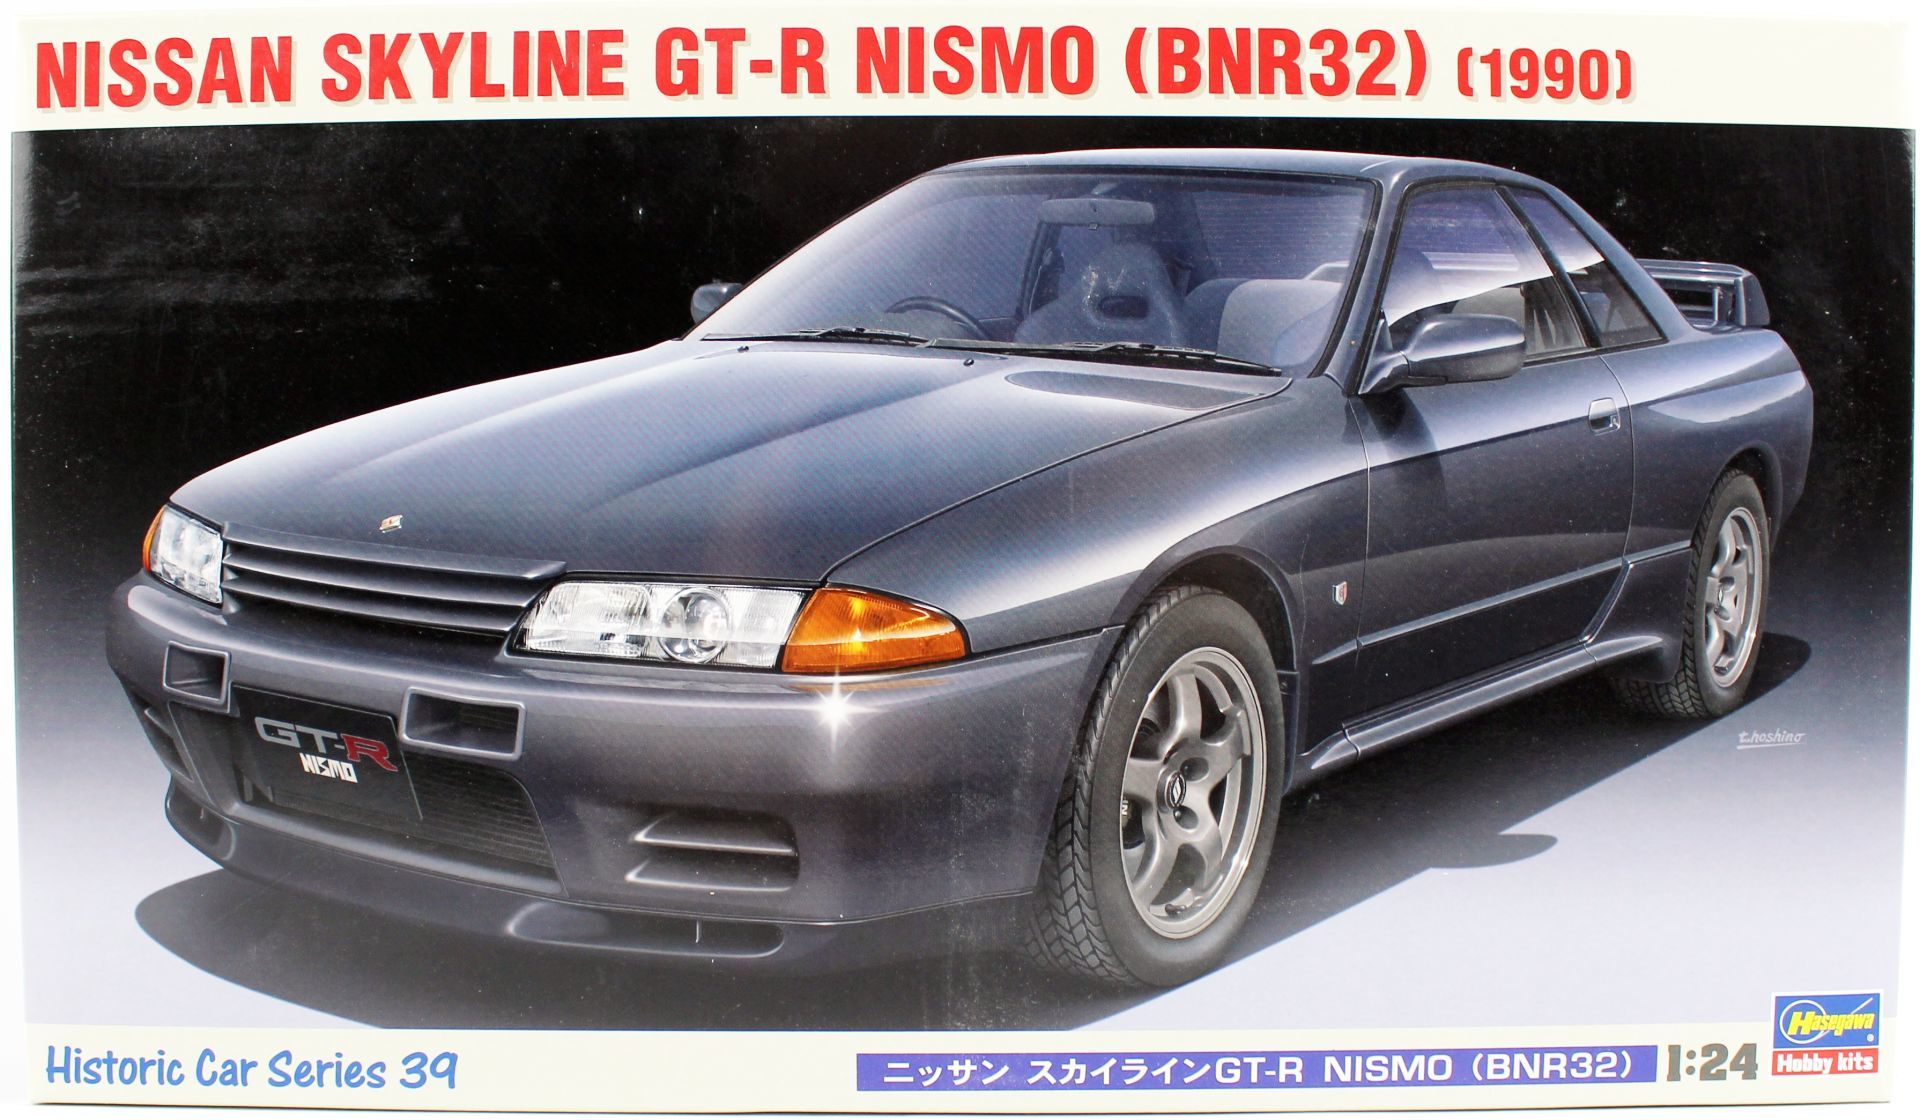 Hasegawa HC39 21139 1/24 Ölçek Nissan Skyline GT-R Nismo (BNR32) Otomobil Plastik Model Kiti